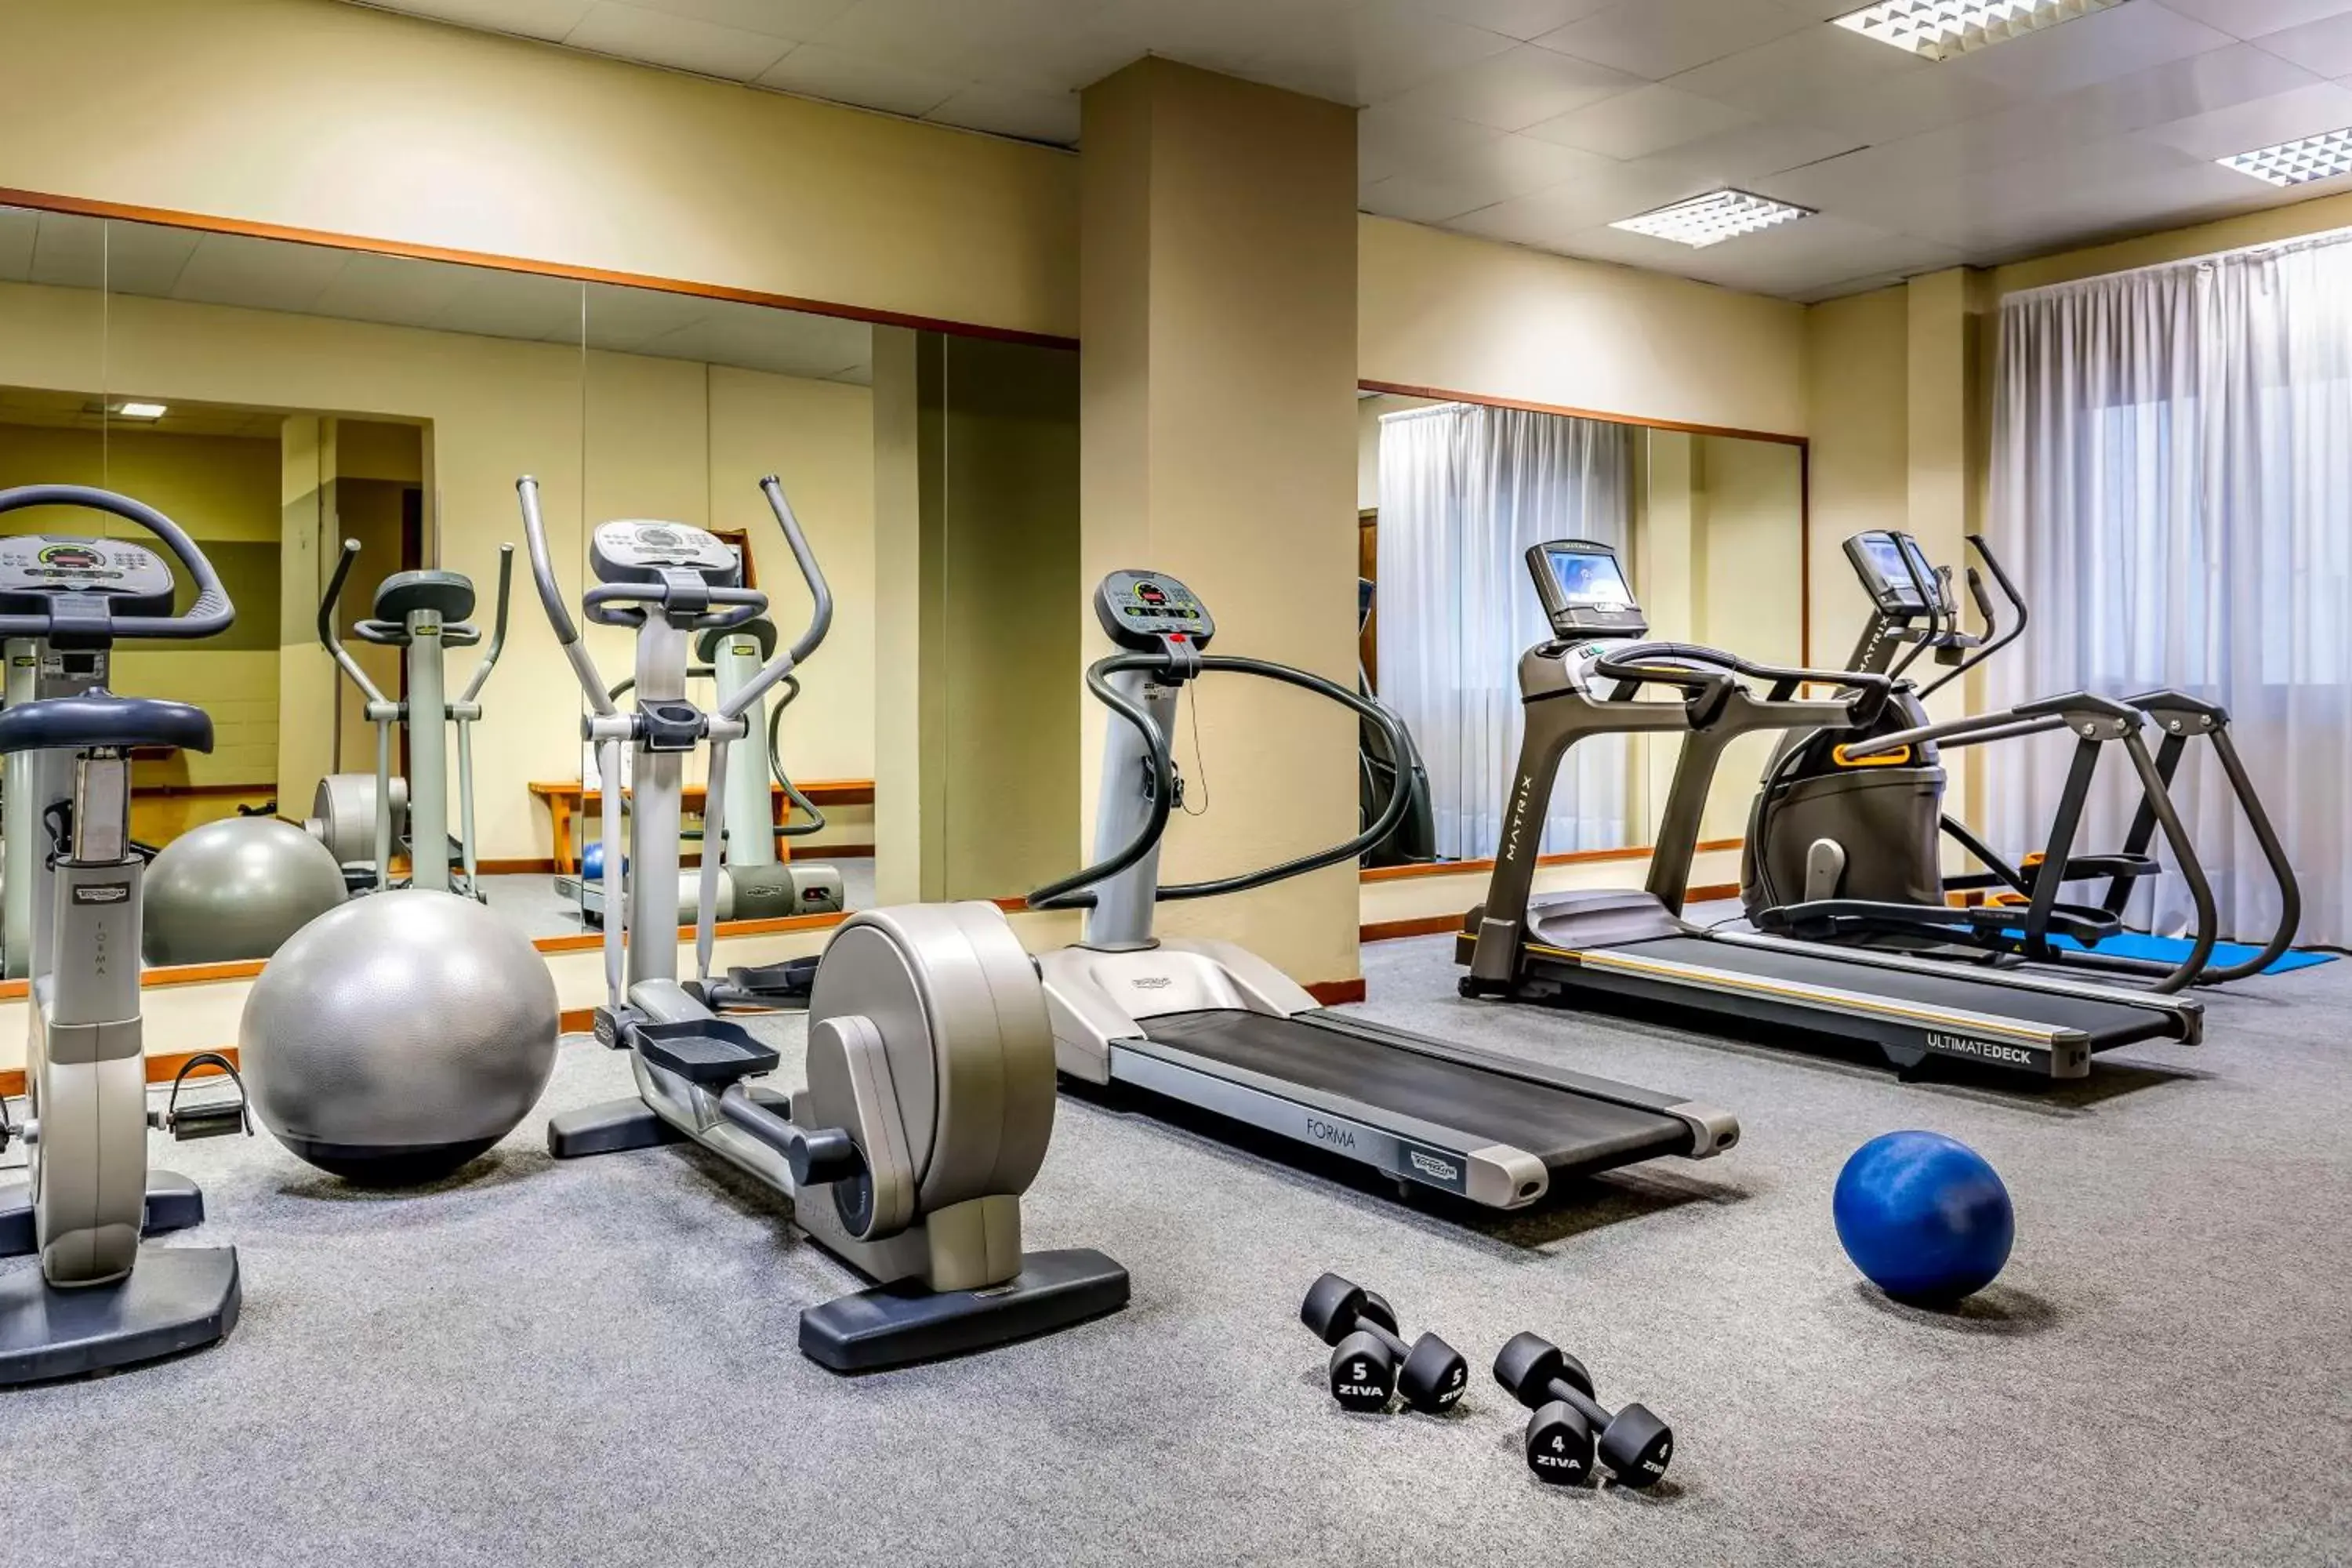 Fitness centre/facilities, Fitness Center/Facilities in Best Western Cavalieri Della Corona